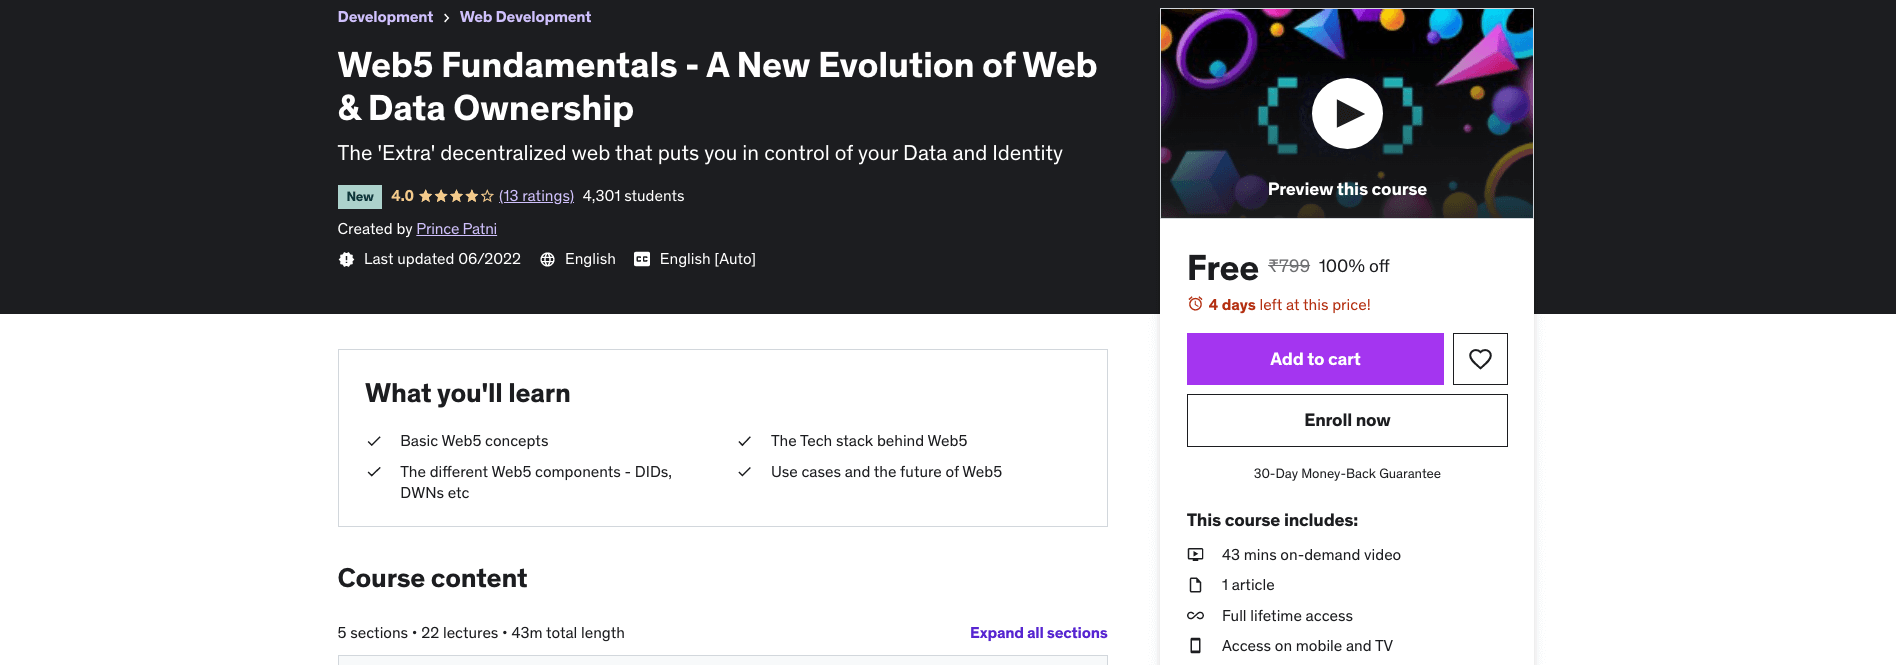 Web5 Fundamentals - A New Evolution of Web & Data Ownership